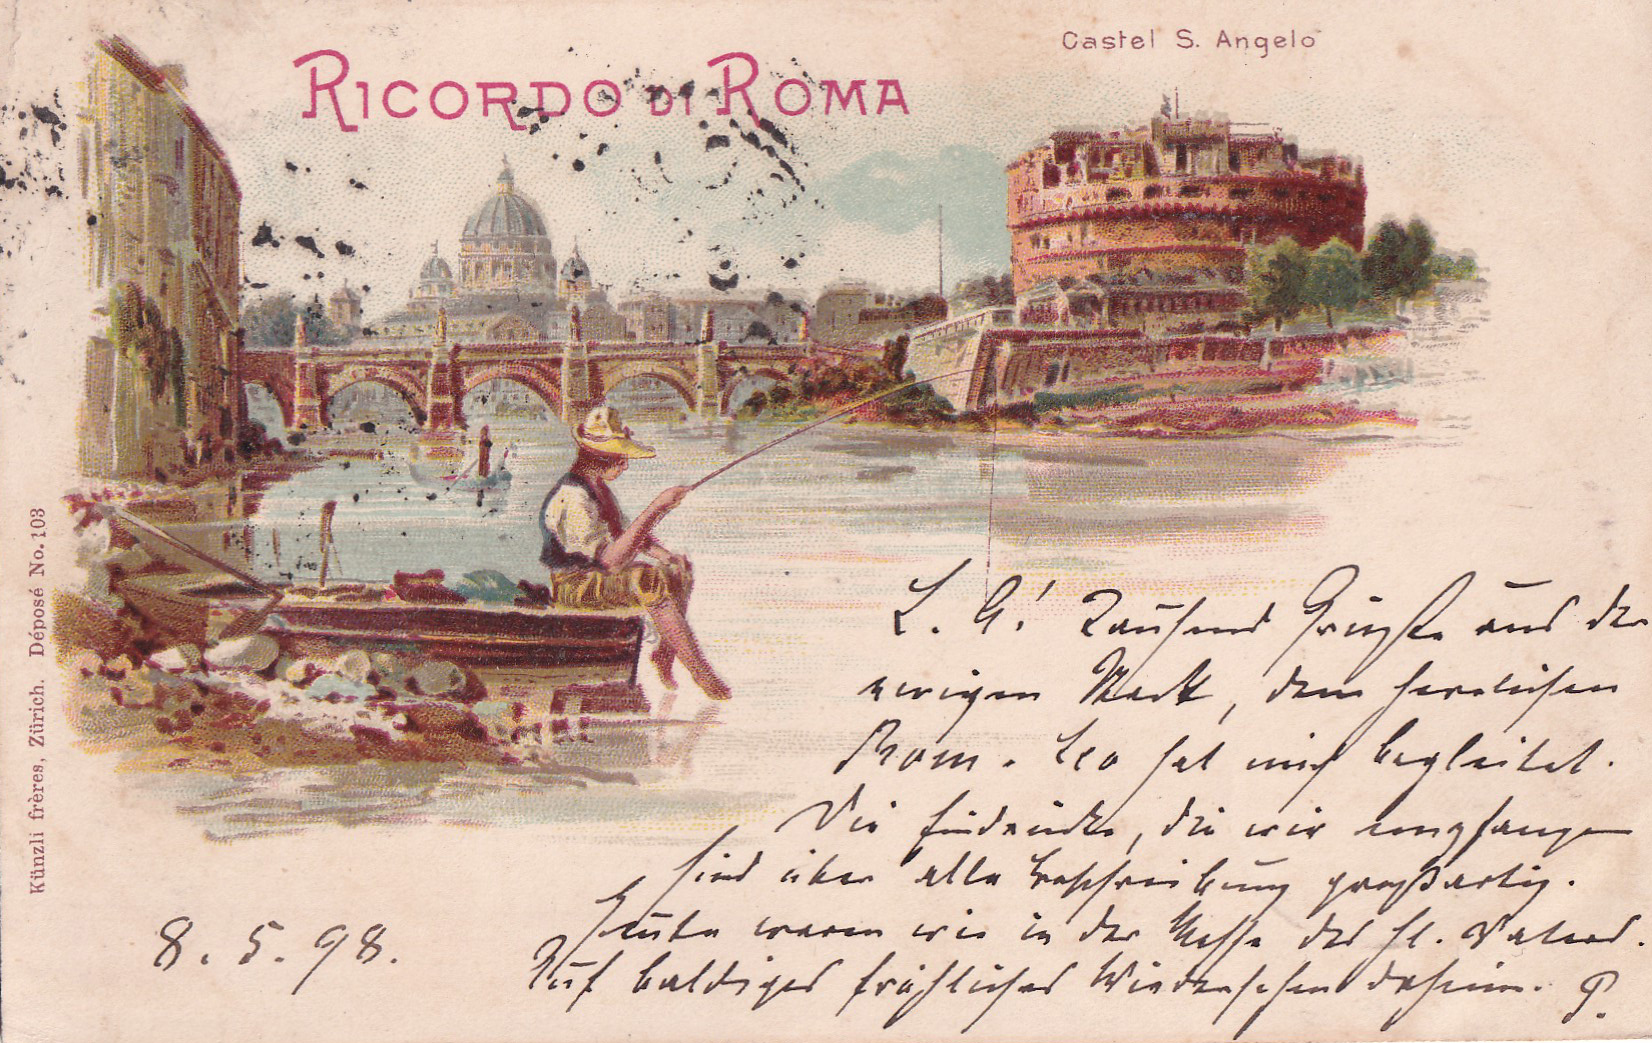 ROMA - 08.05.1898 - Erinnerung an Rom - Souvenir de Rome - Memory of Rome